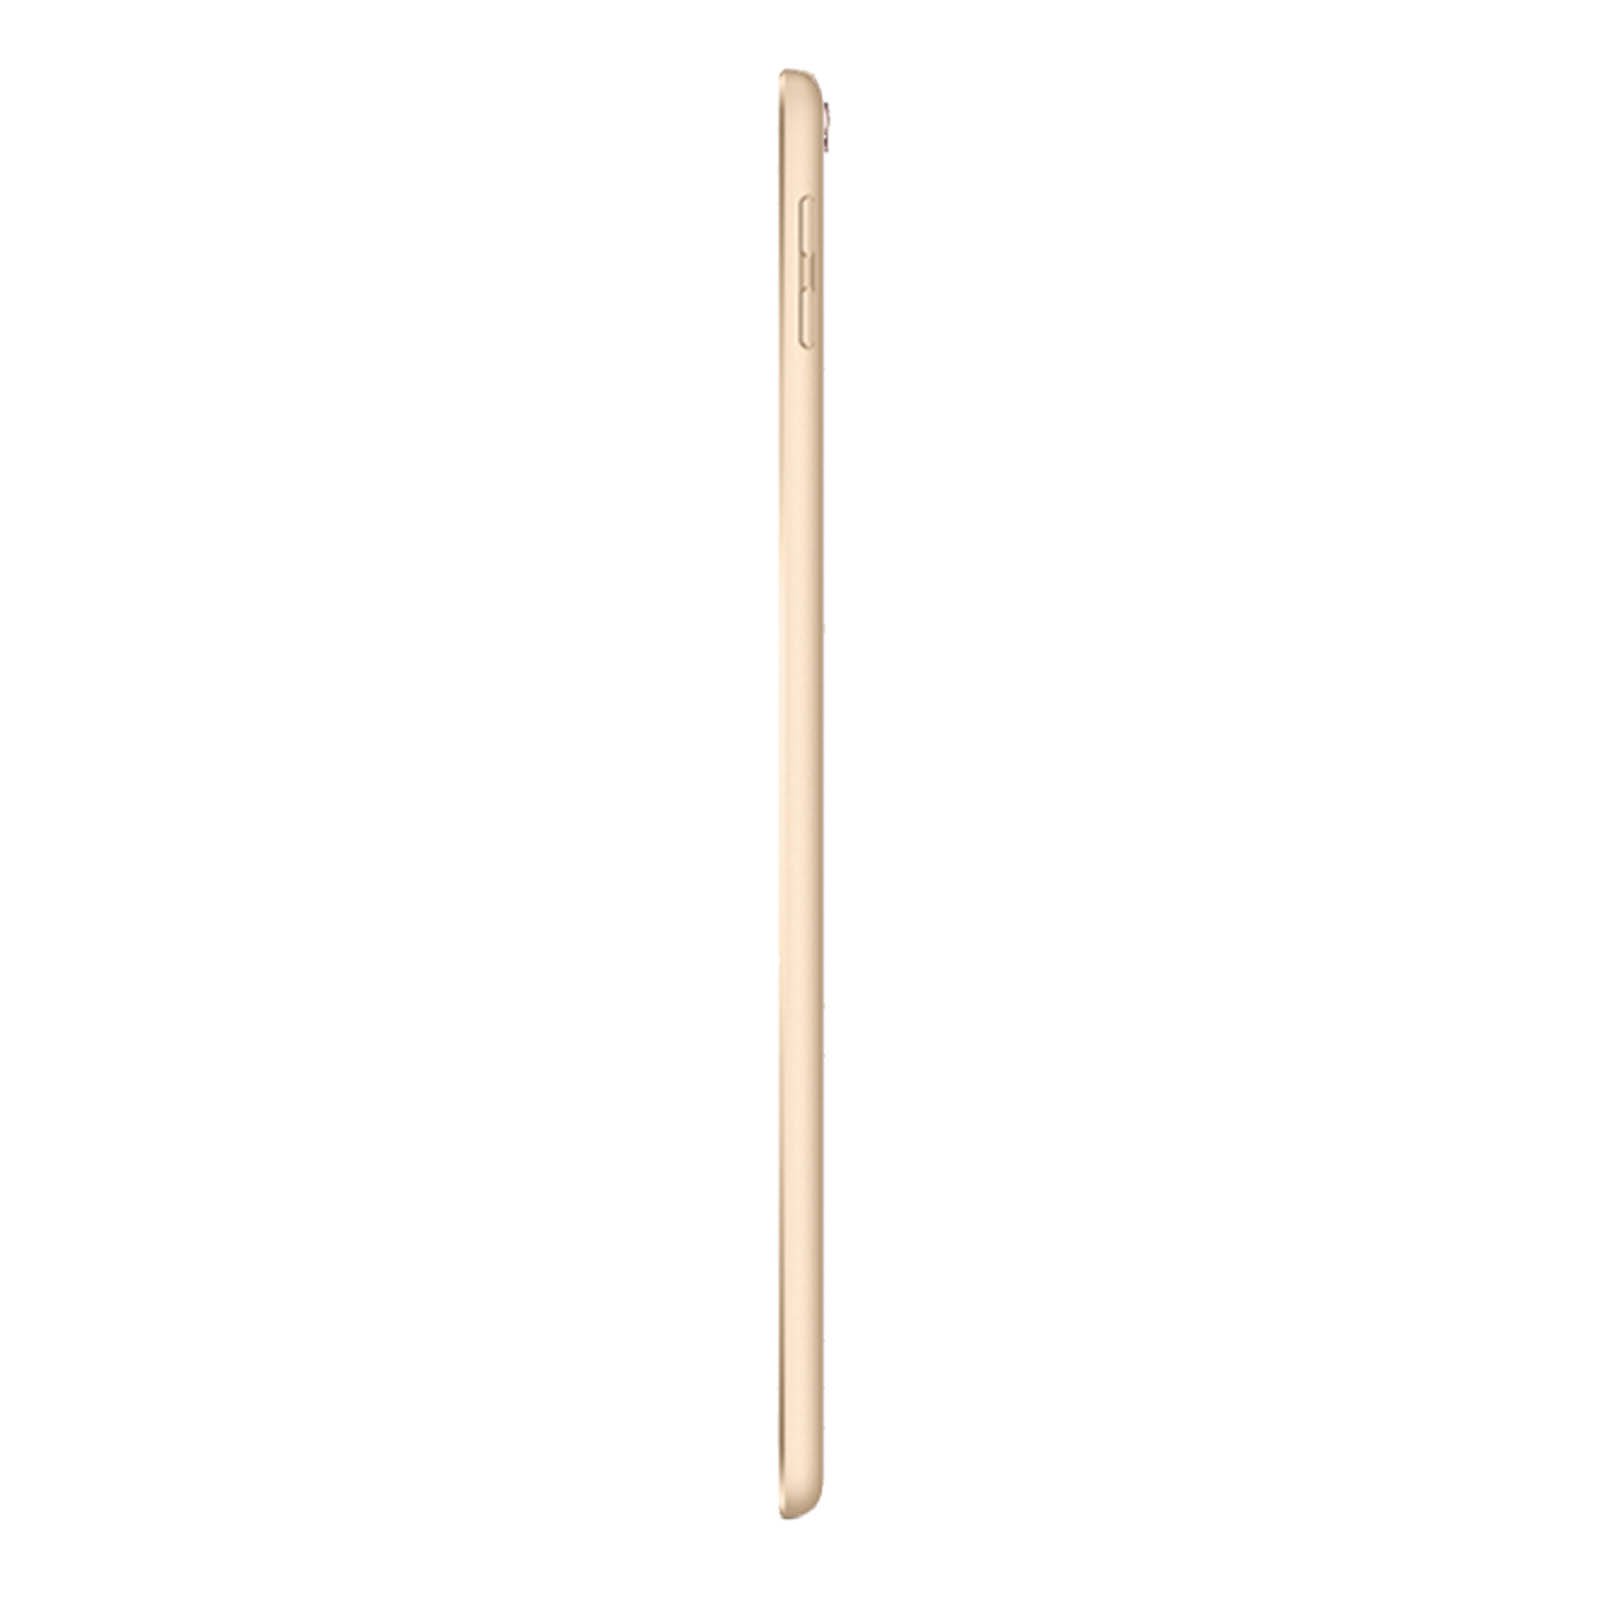 iPad Pro 10.5 Inch 64GB Gold Pristine - Unlocked